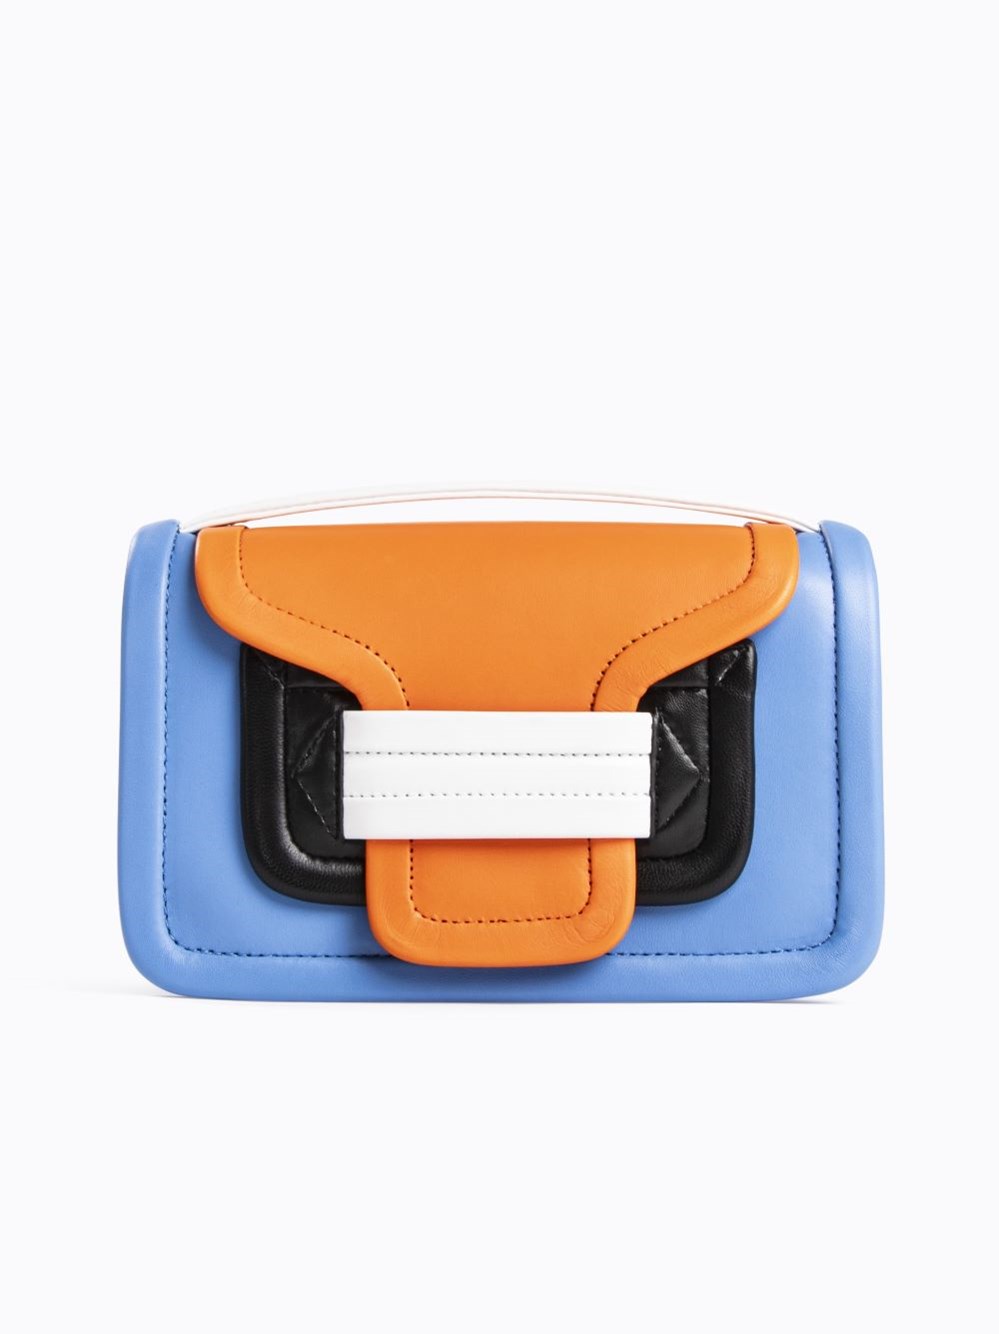 Pierre Hardy Alpha Handbag In Orange